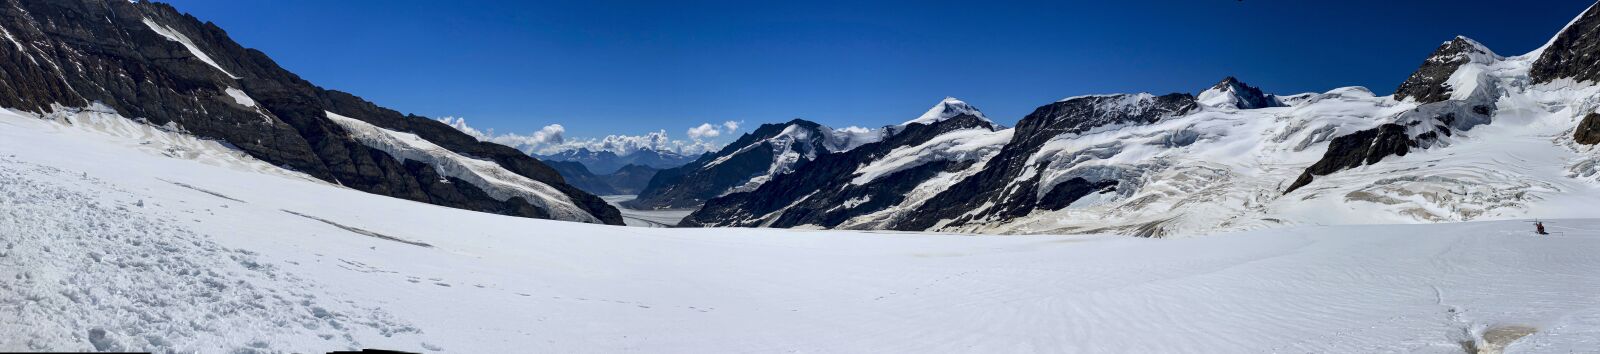 Apple iPhone 11 Pro + iPhone 11 Pro back camera 6mm f/2 sample photo. Jungfraujoch, aletsch glacier, switzerland photography